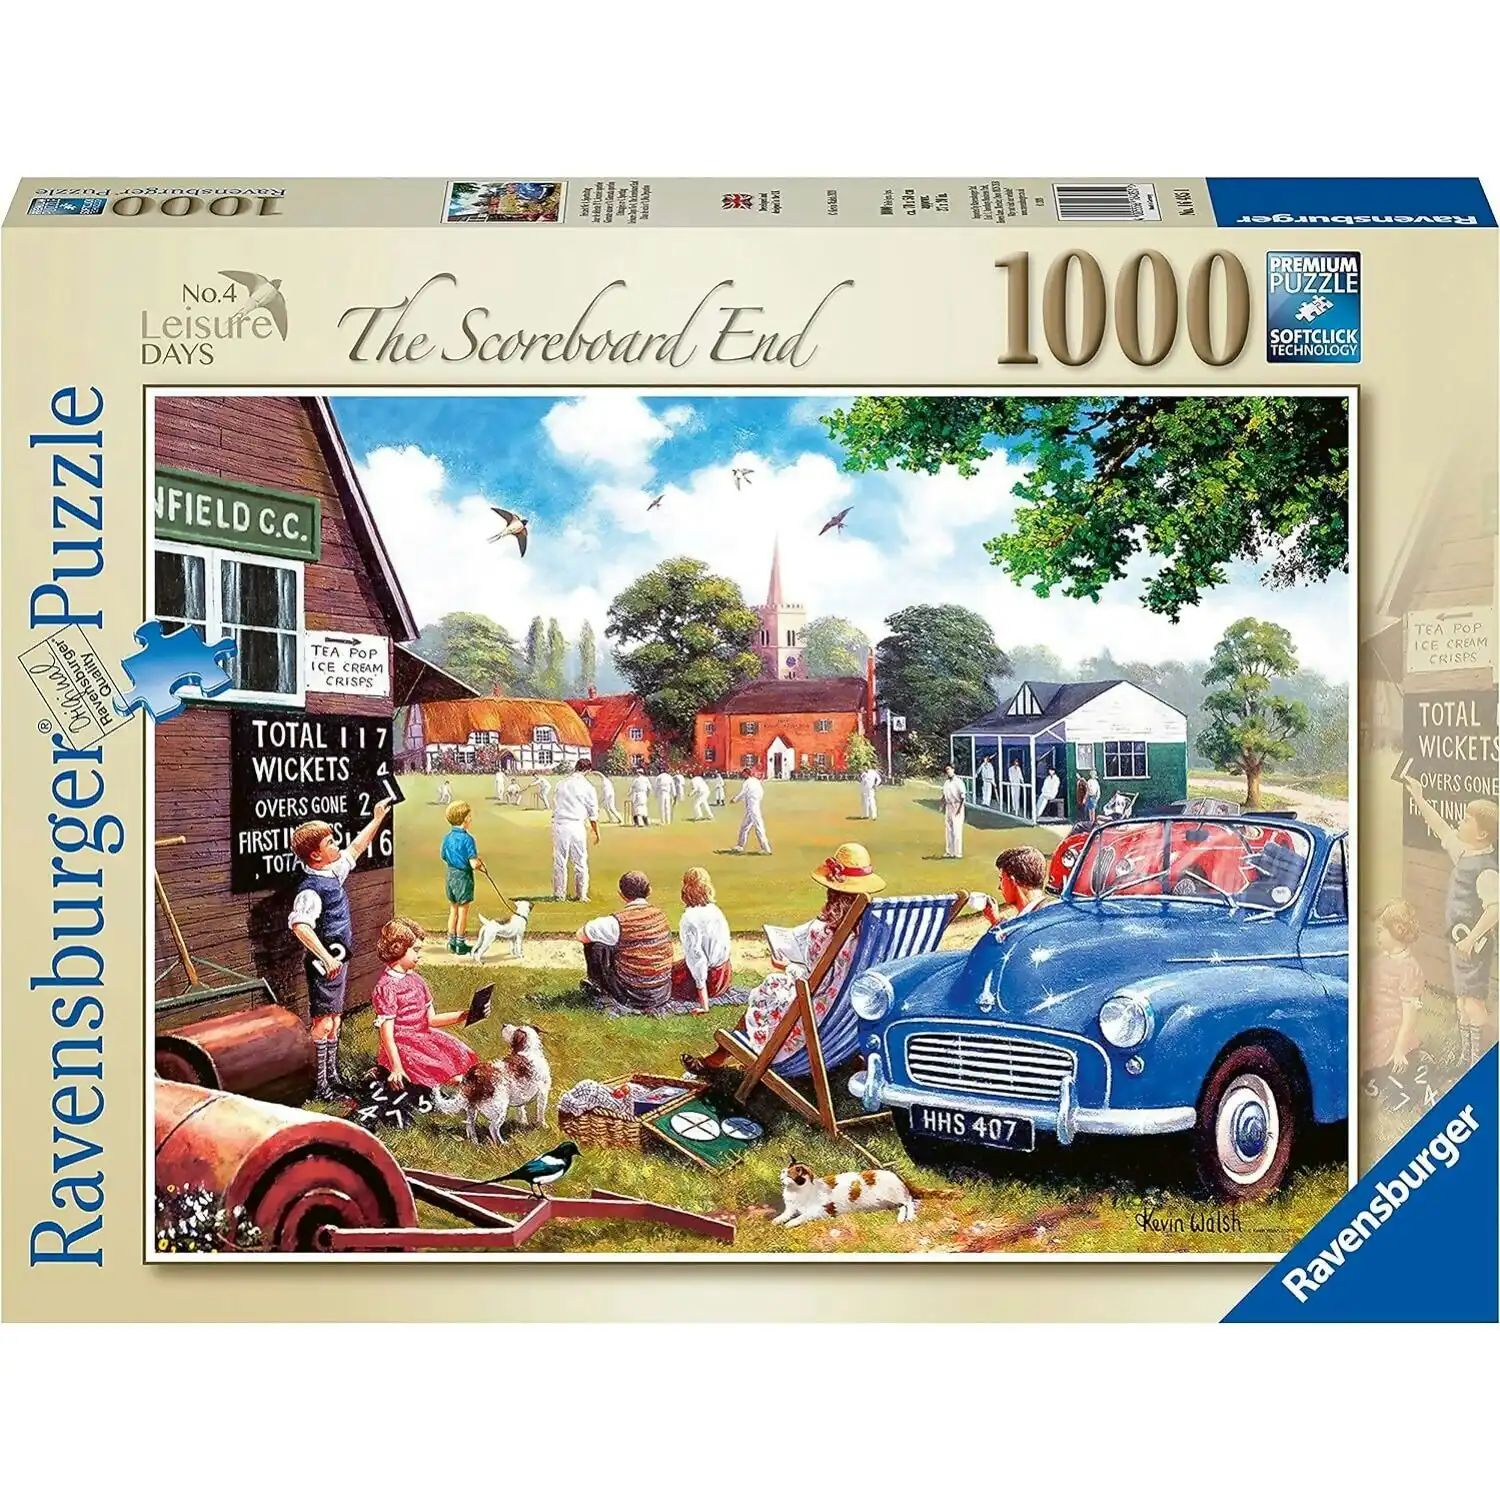 Ravensburger - The Scoreboard End Jigsaw Puzzle 1000pc